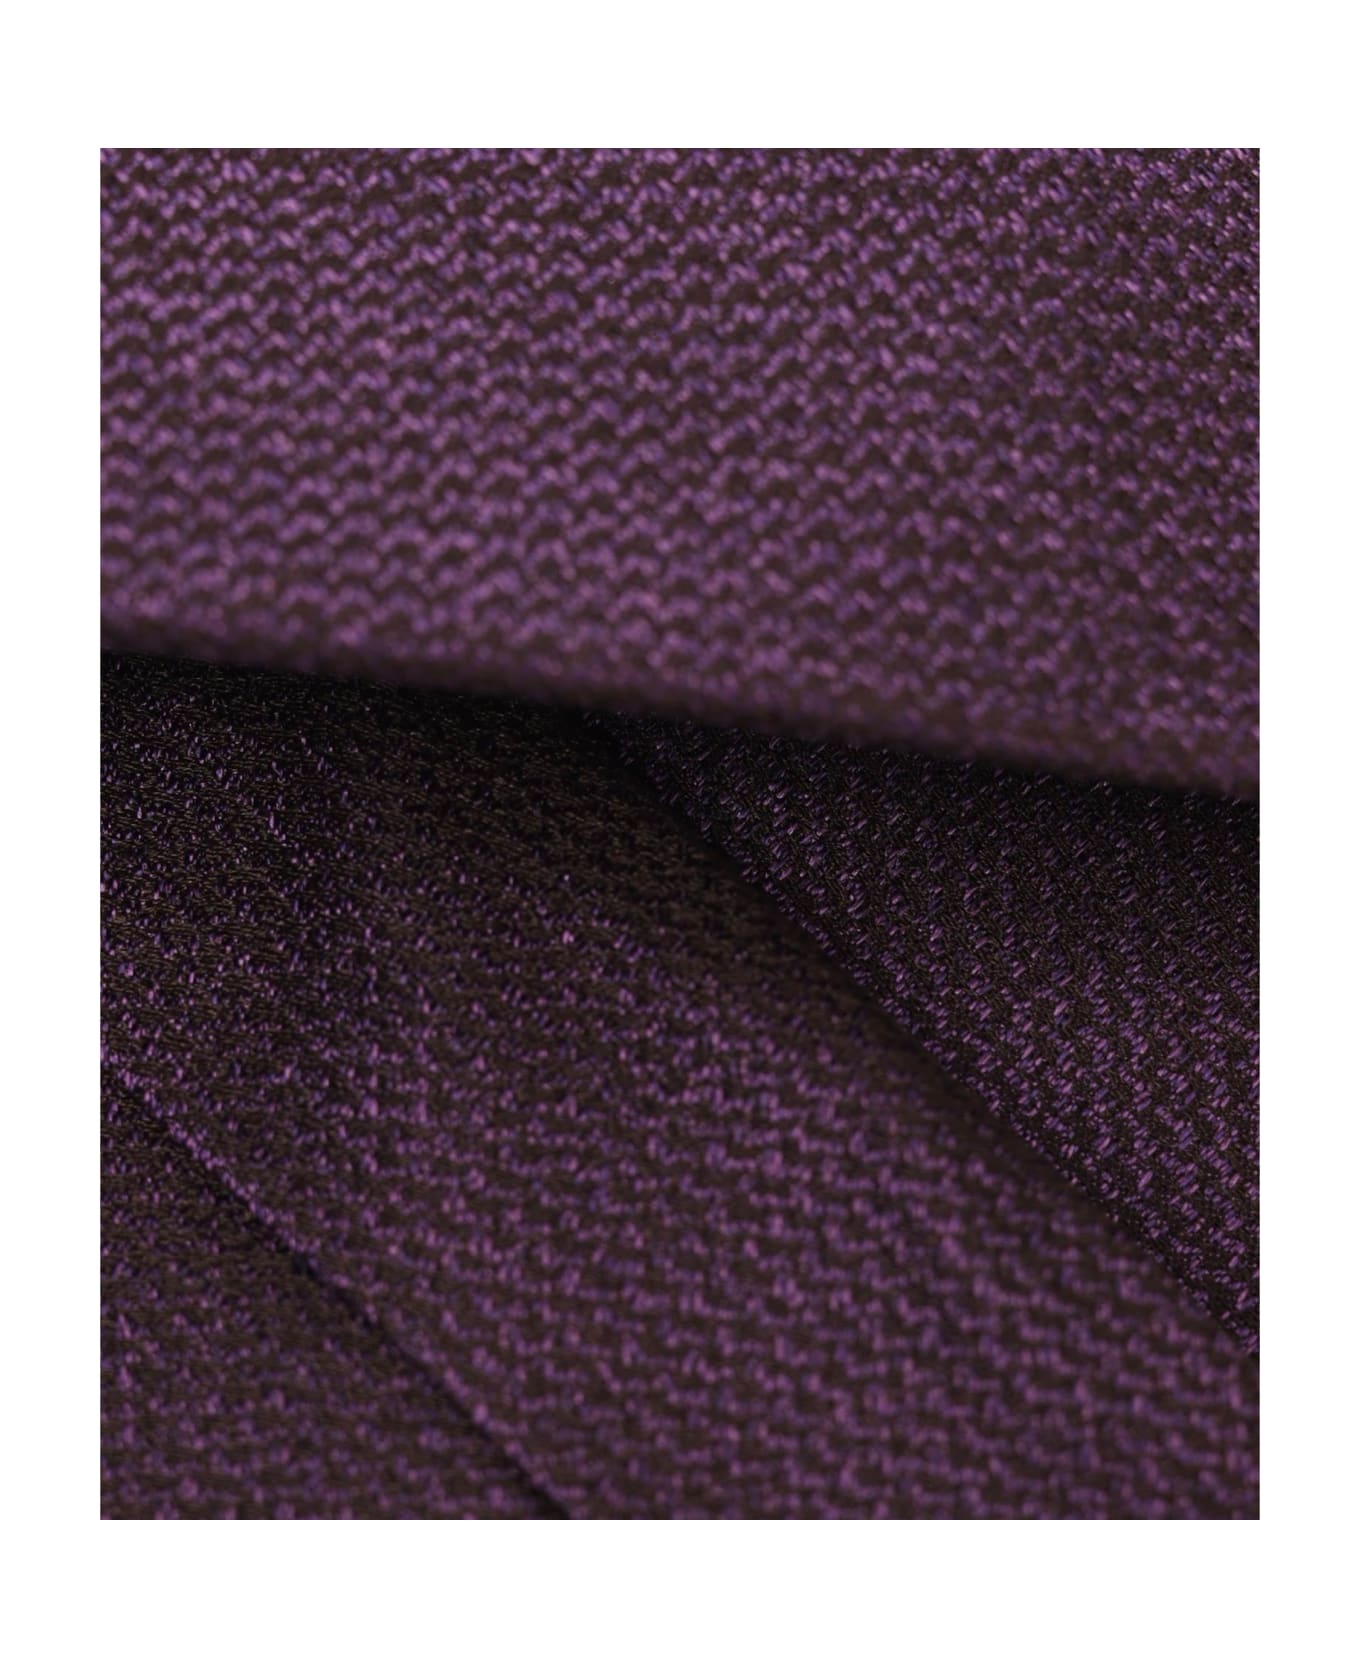 Larusmiani Tie 'seven' Tie - Purple ネクタイ